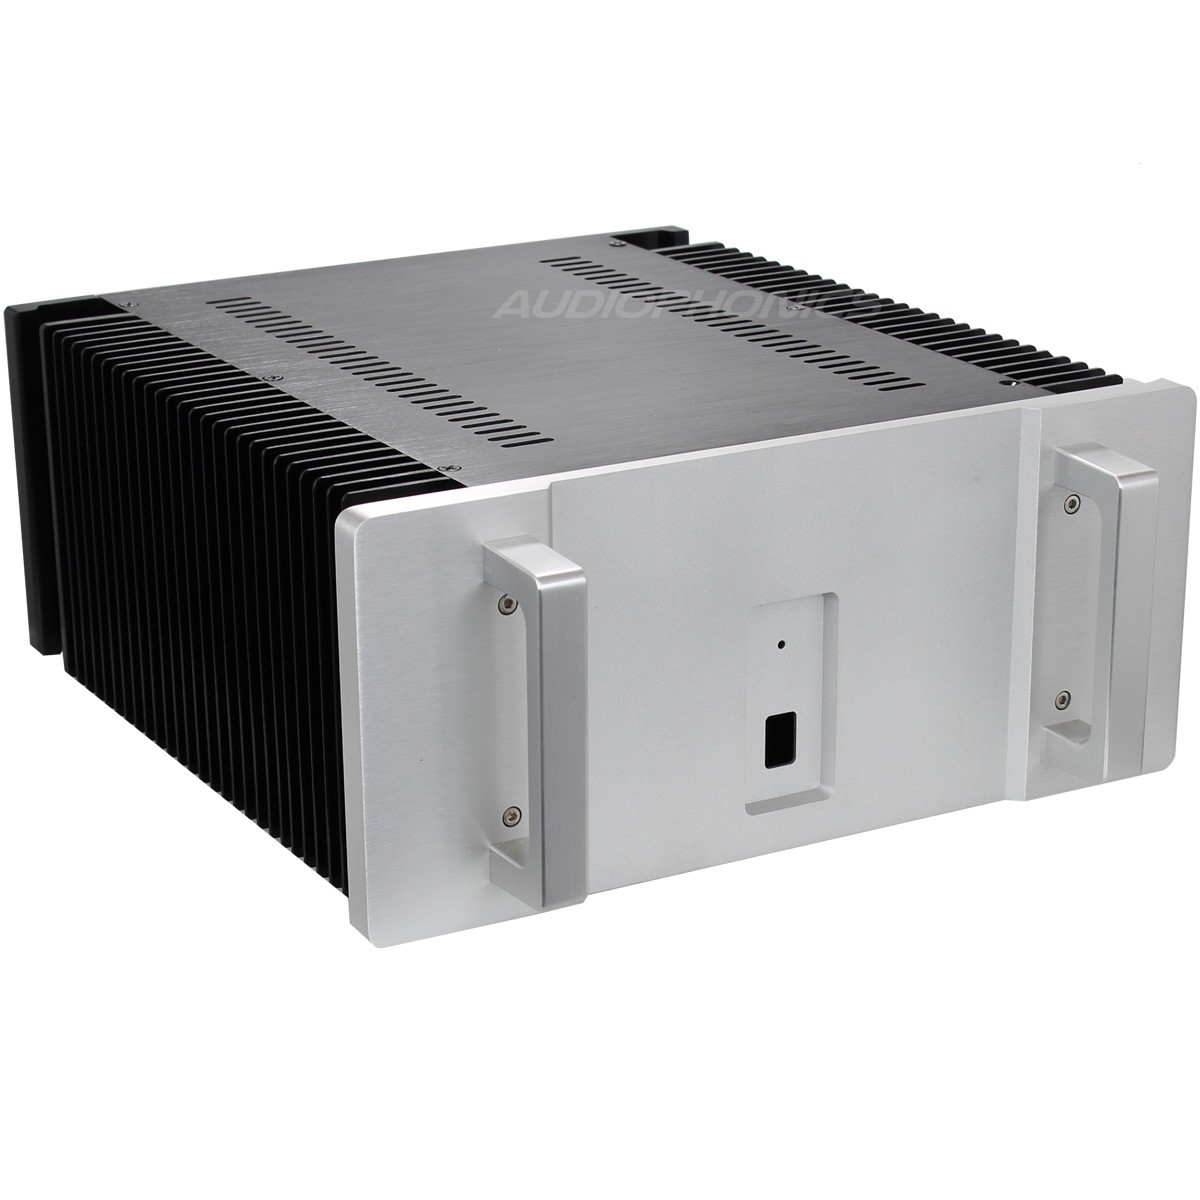 DIY Box / Case Stereo Power Amplifier 100% Aluminium 361x274x85mm